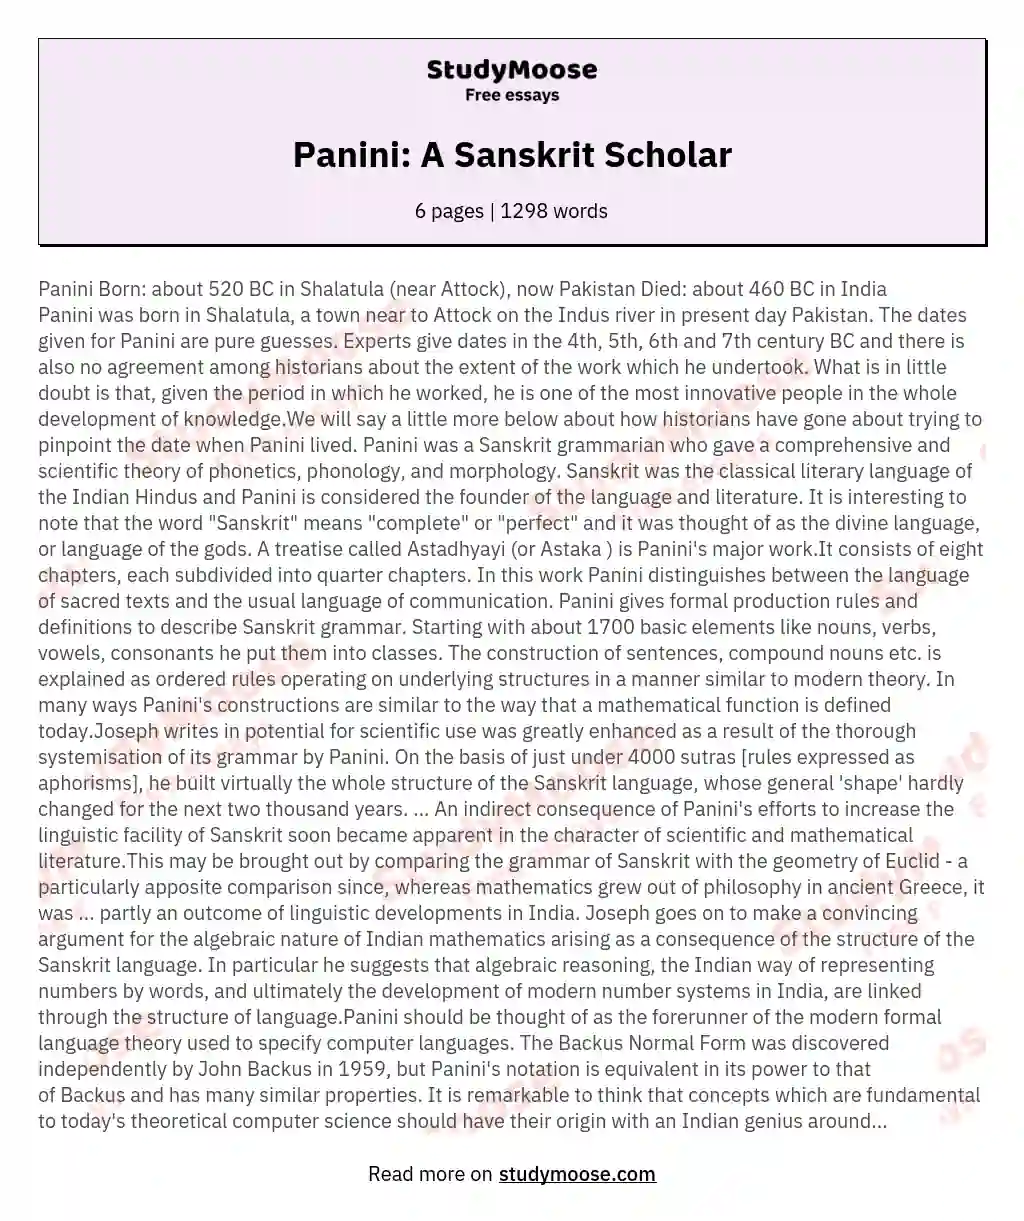 Panini: A Sanskrit Scholar